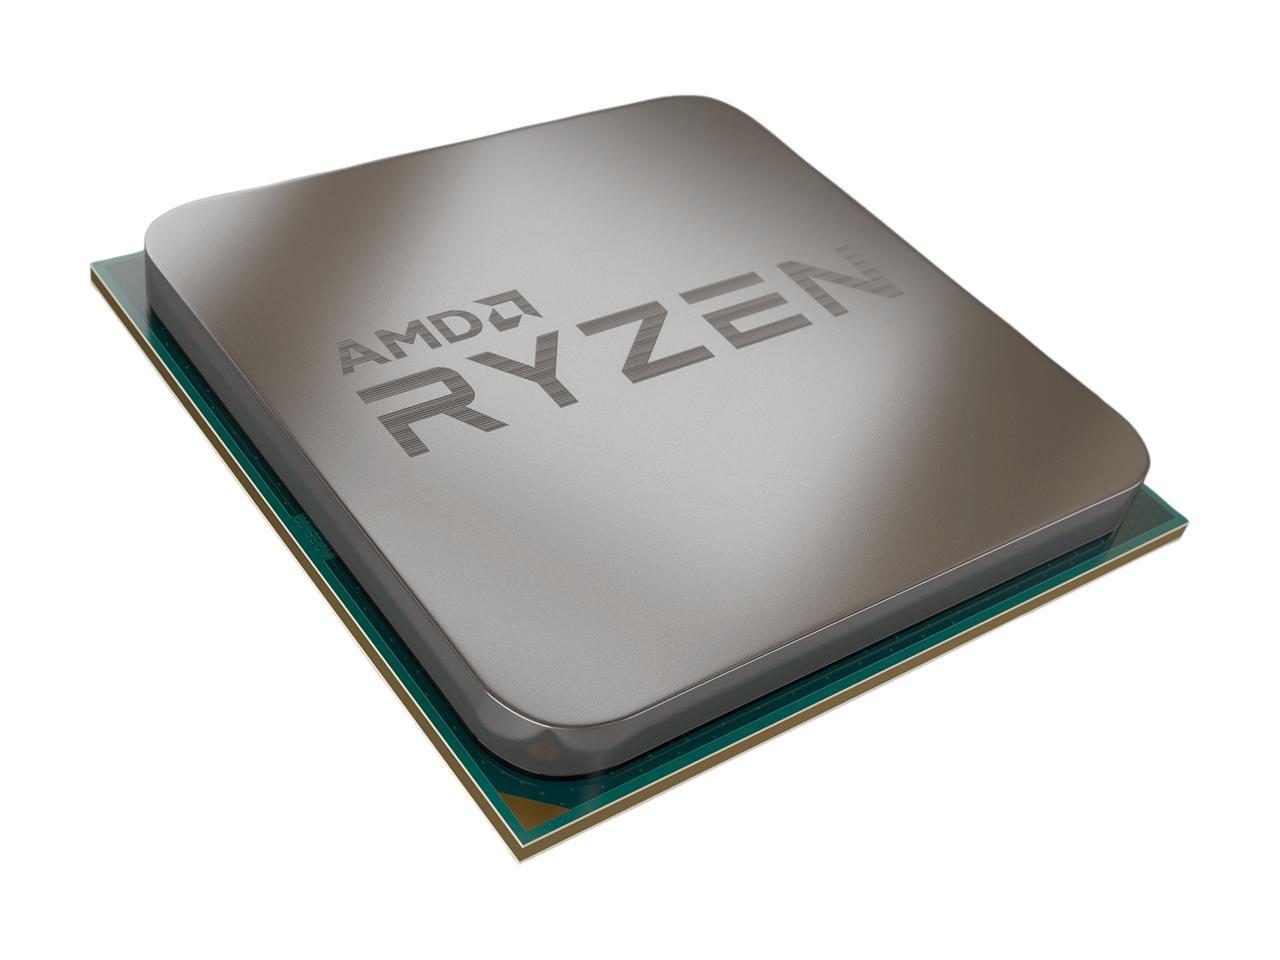 AMD Ryzen 3 2200G - Rekes Sales